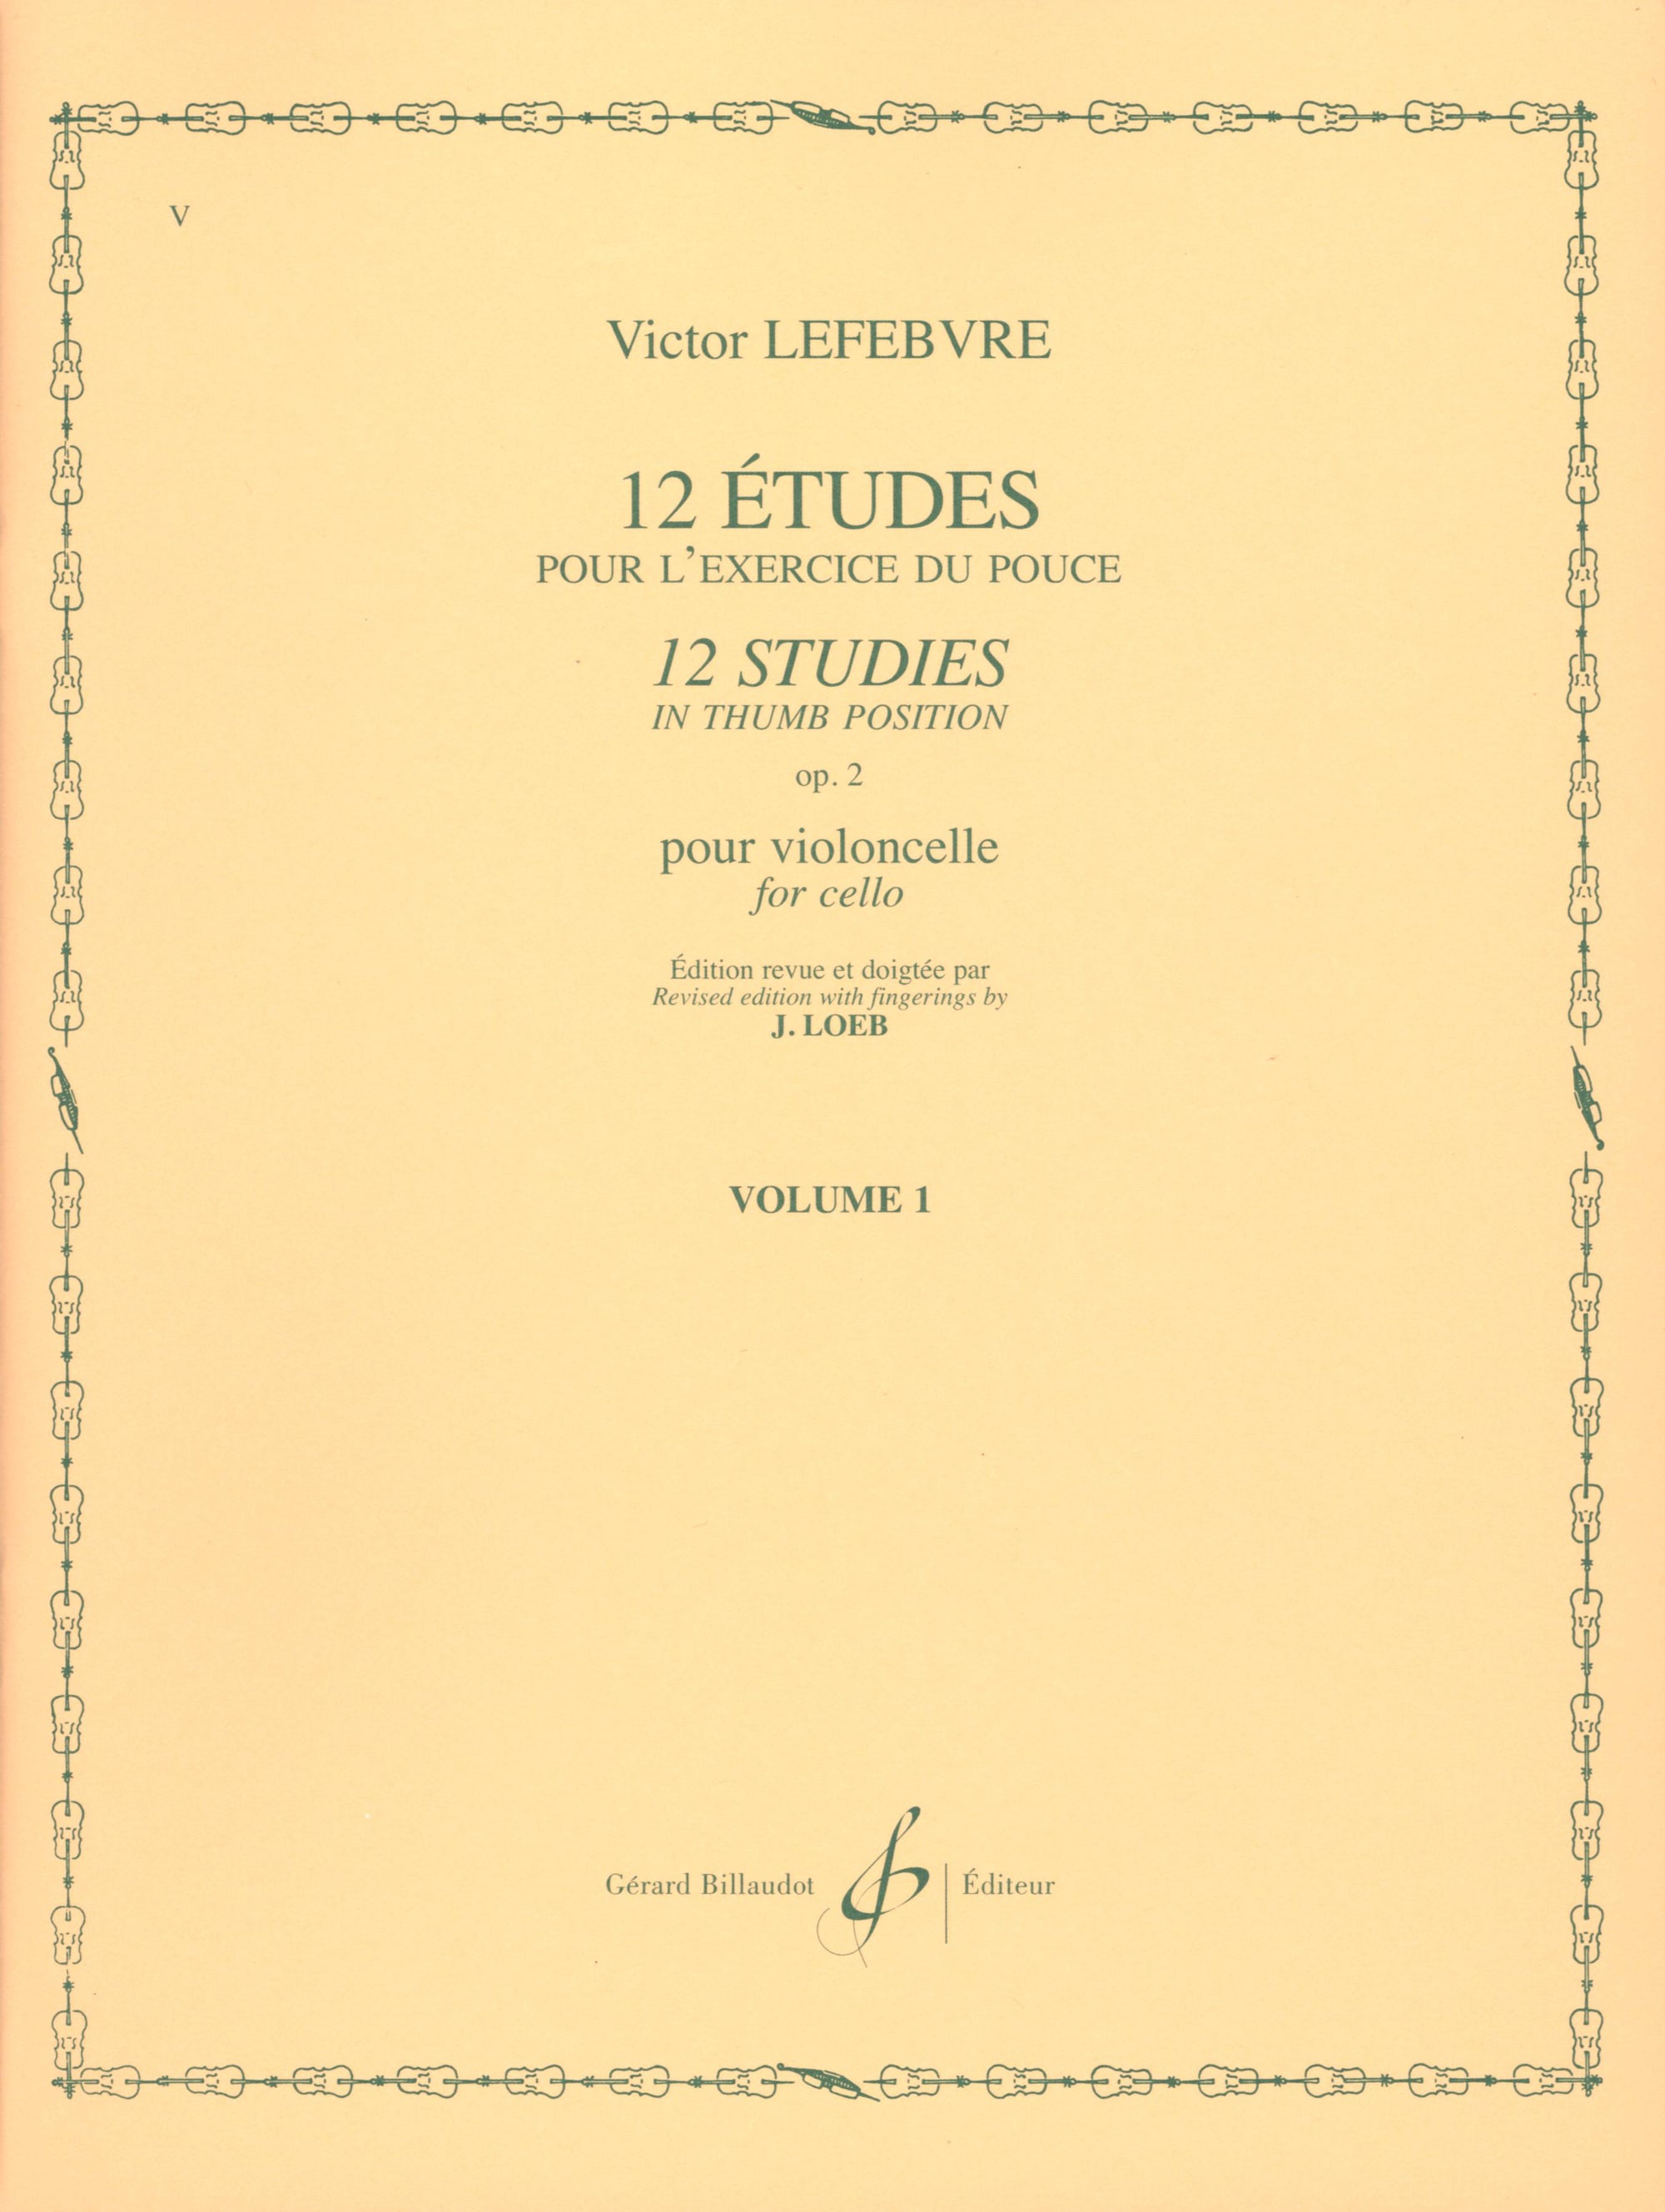 Lefebvre: 12 Études in Thumb Position, Op. 2 - Volume 1 (Nos. 1-6)